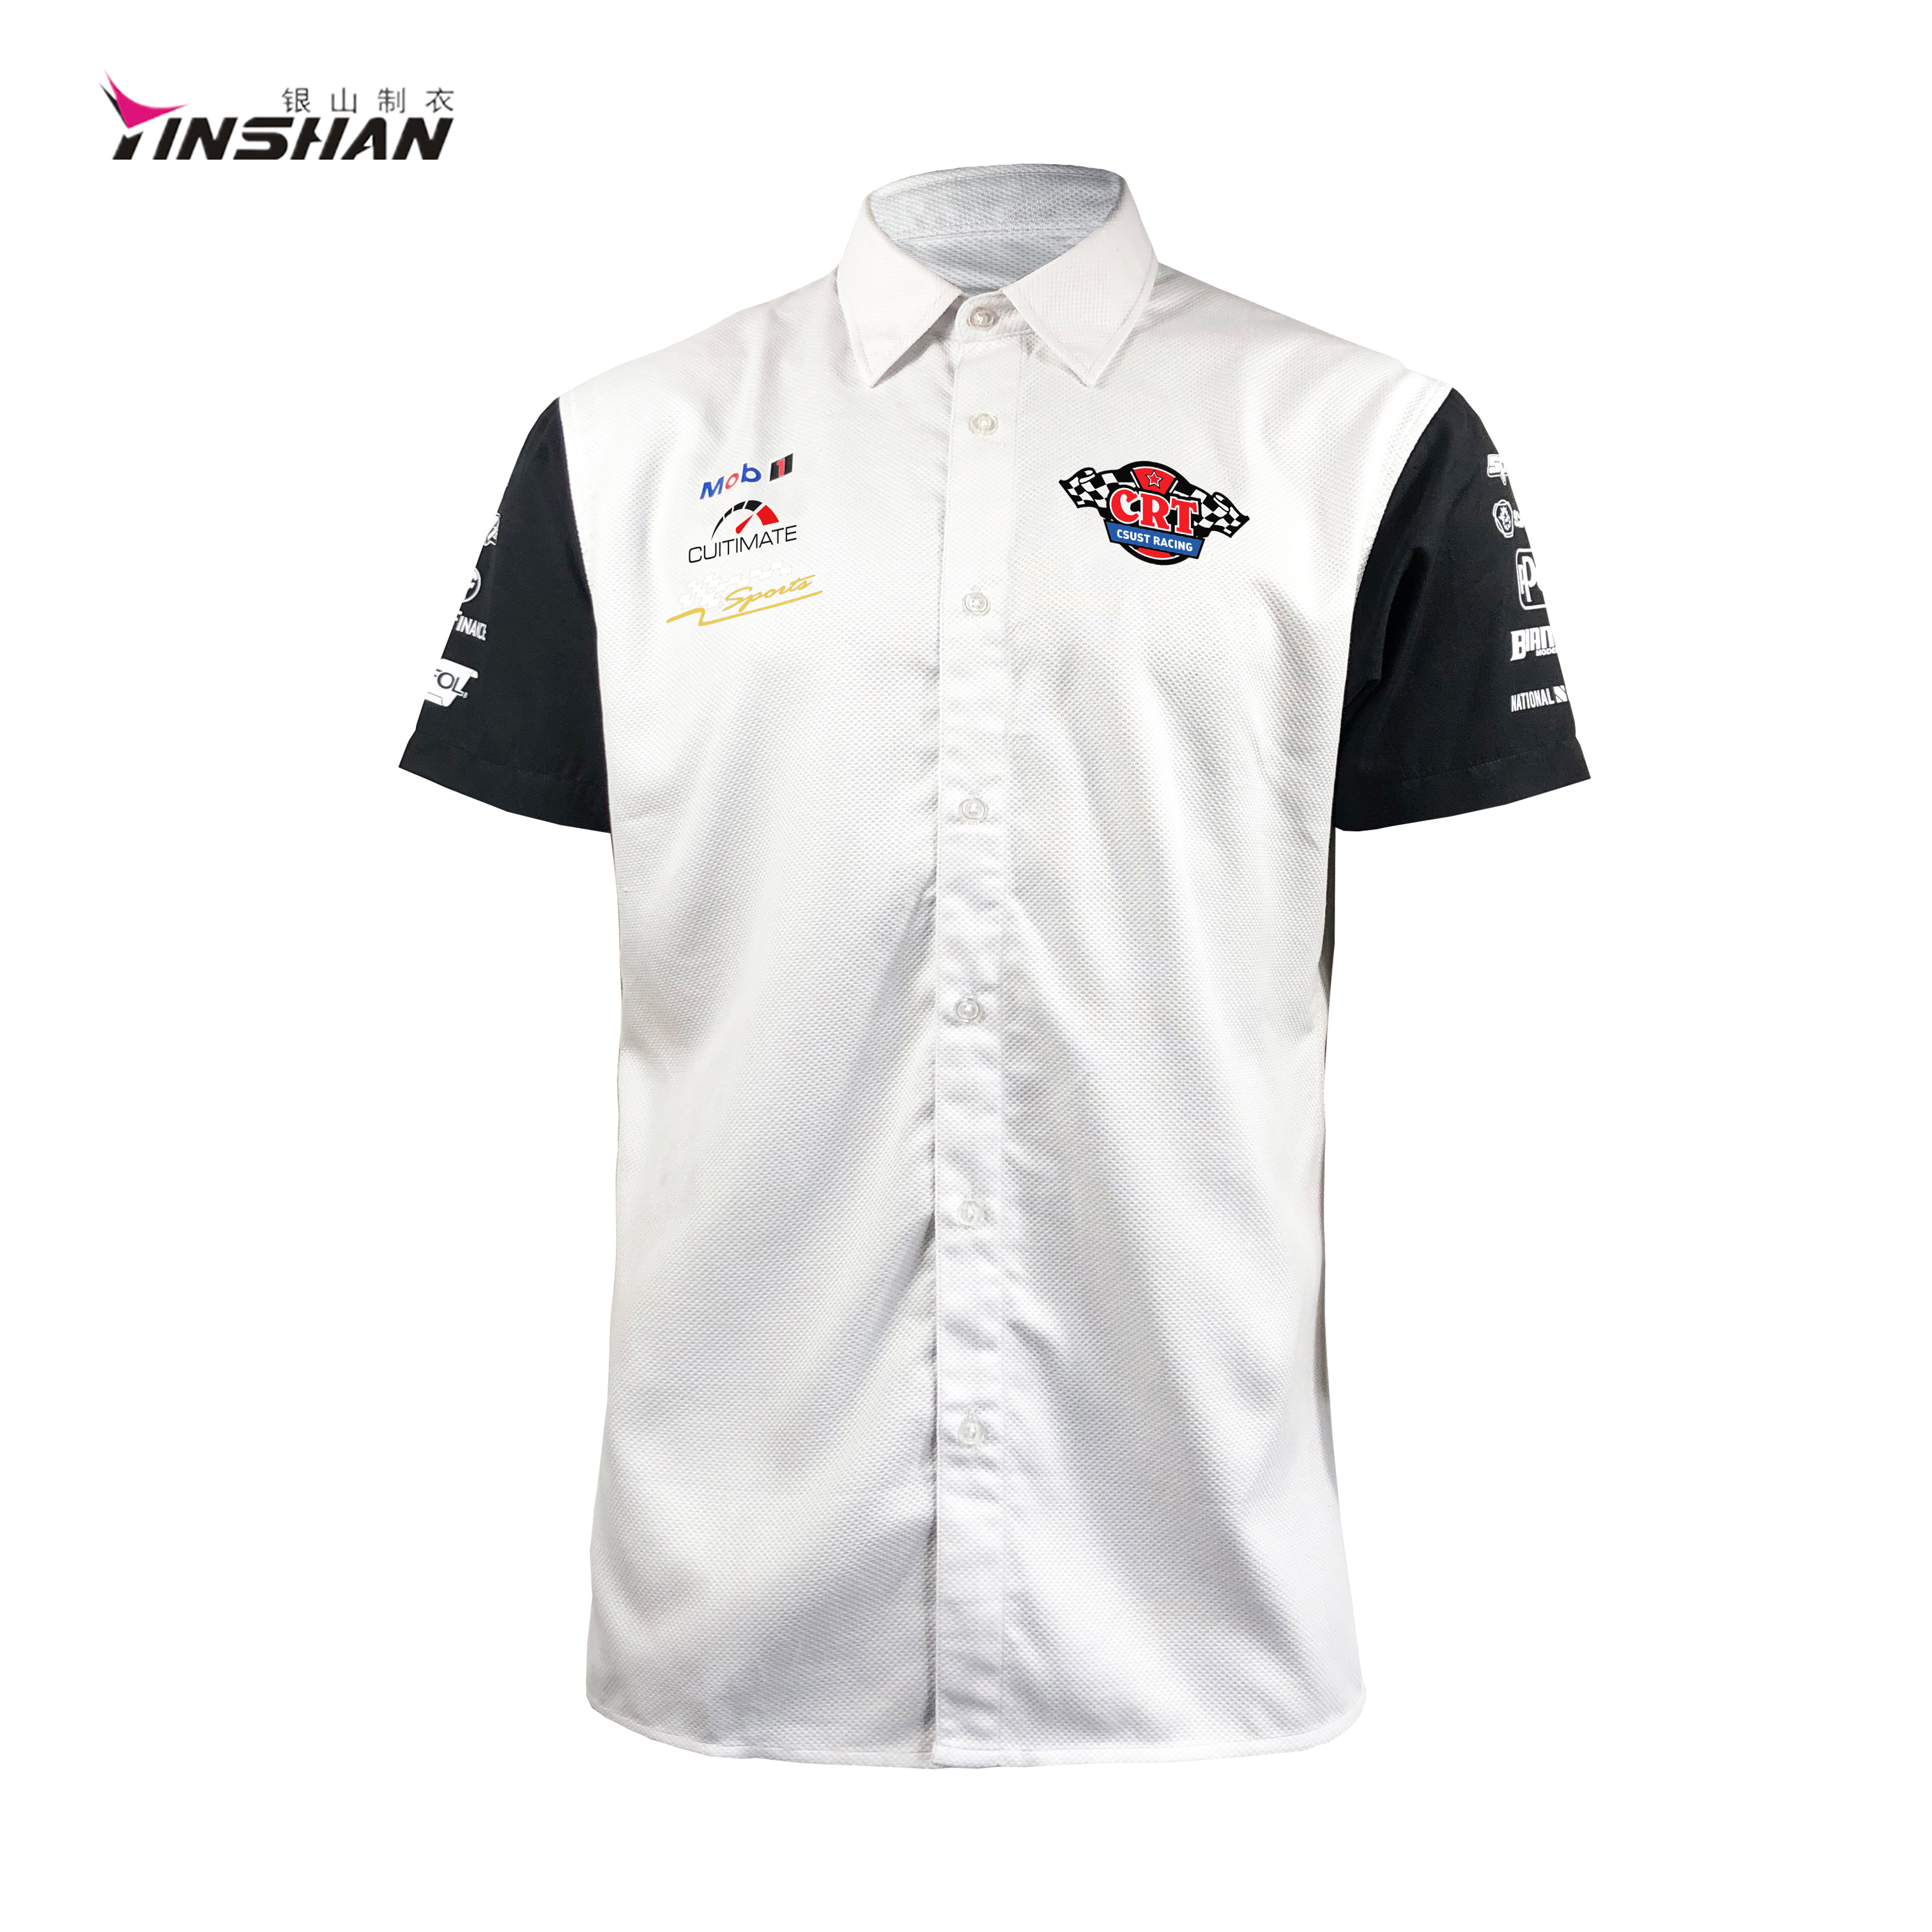 Customized Logo Design Cotton Sports Shirt with Artwork Printing 1